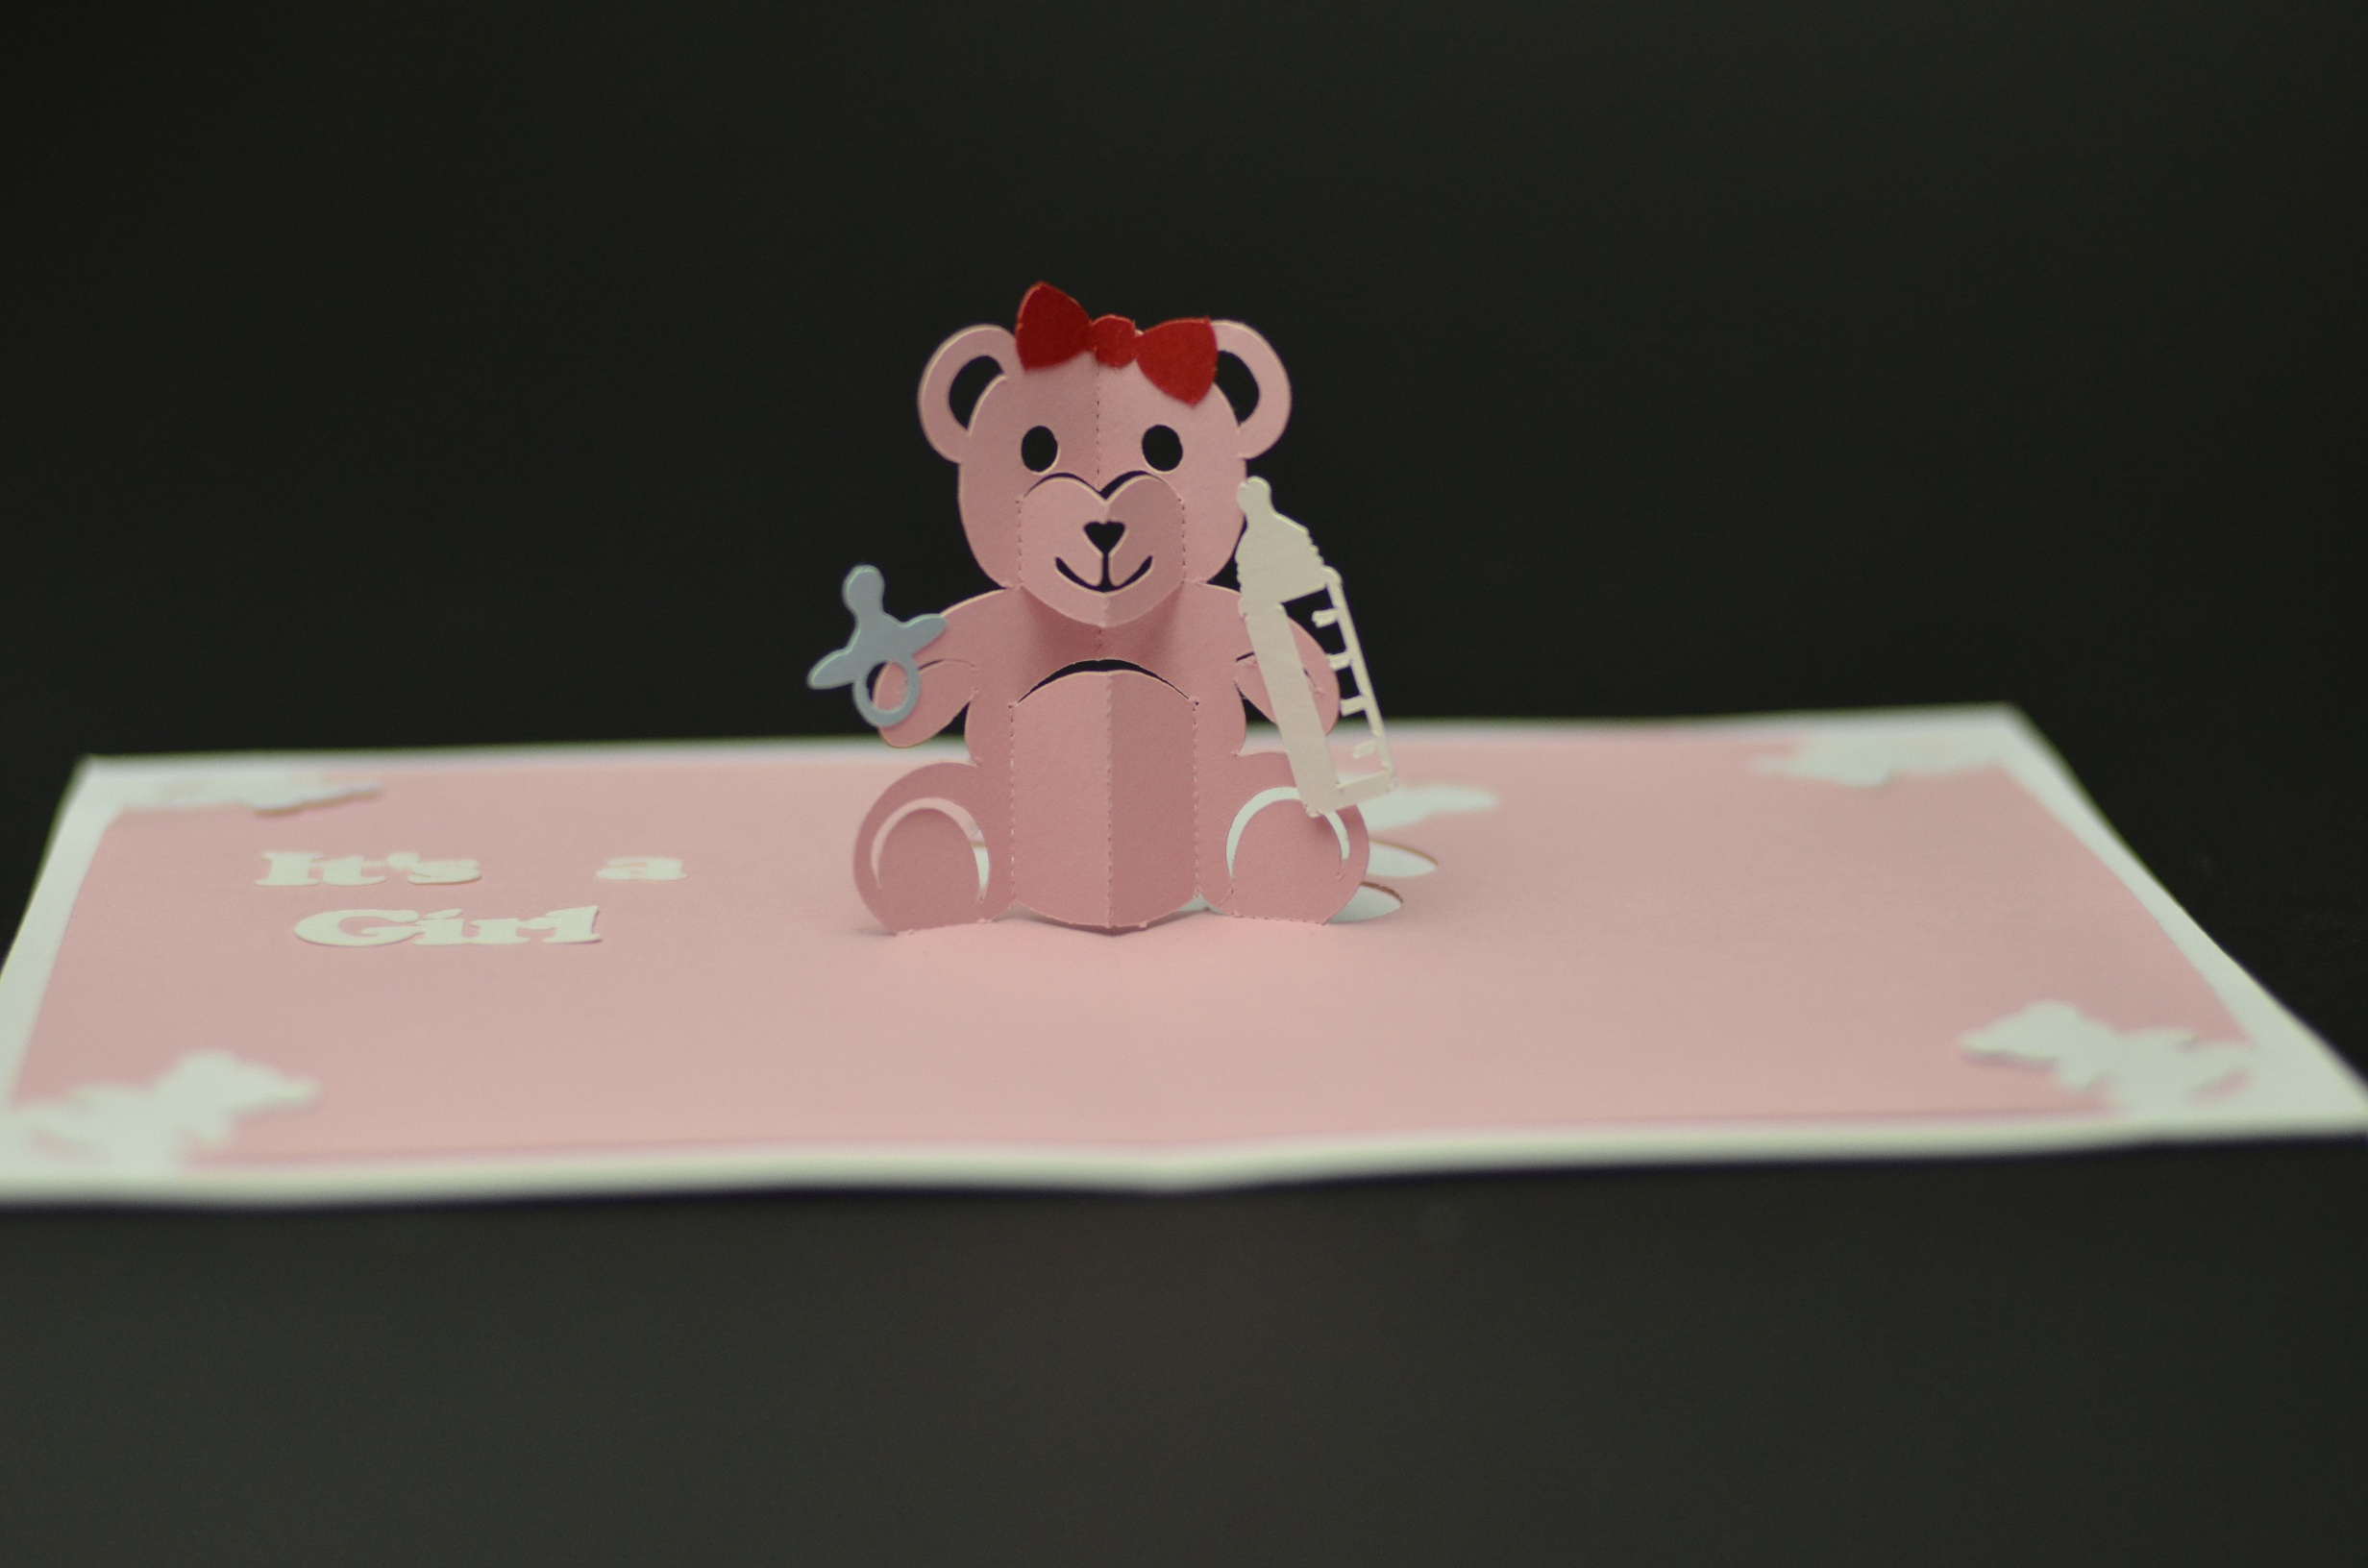 Teddy Bear Pop Up Card: Tutorial And Template – Creative Pop With Teddy Bear Pop Up Card Template Free